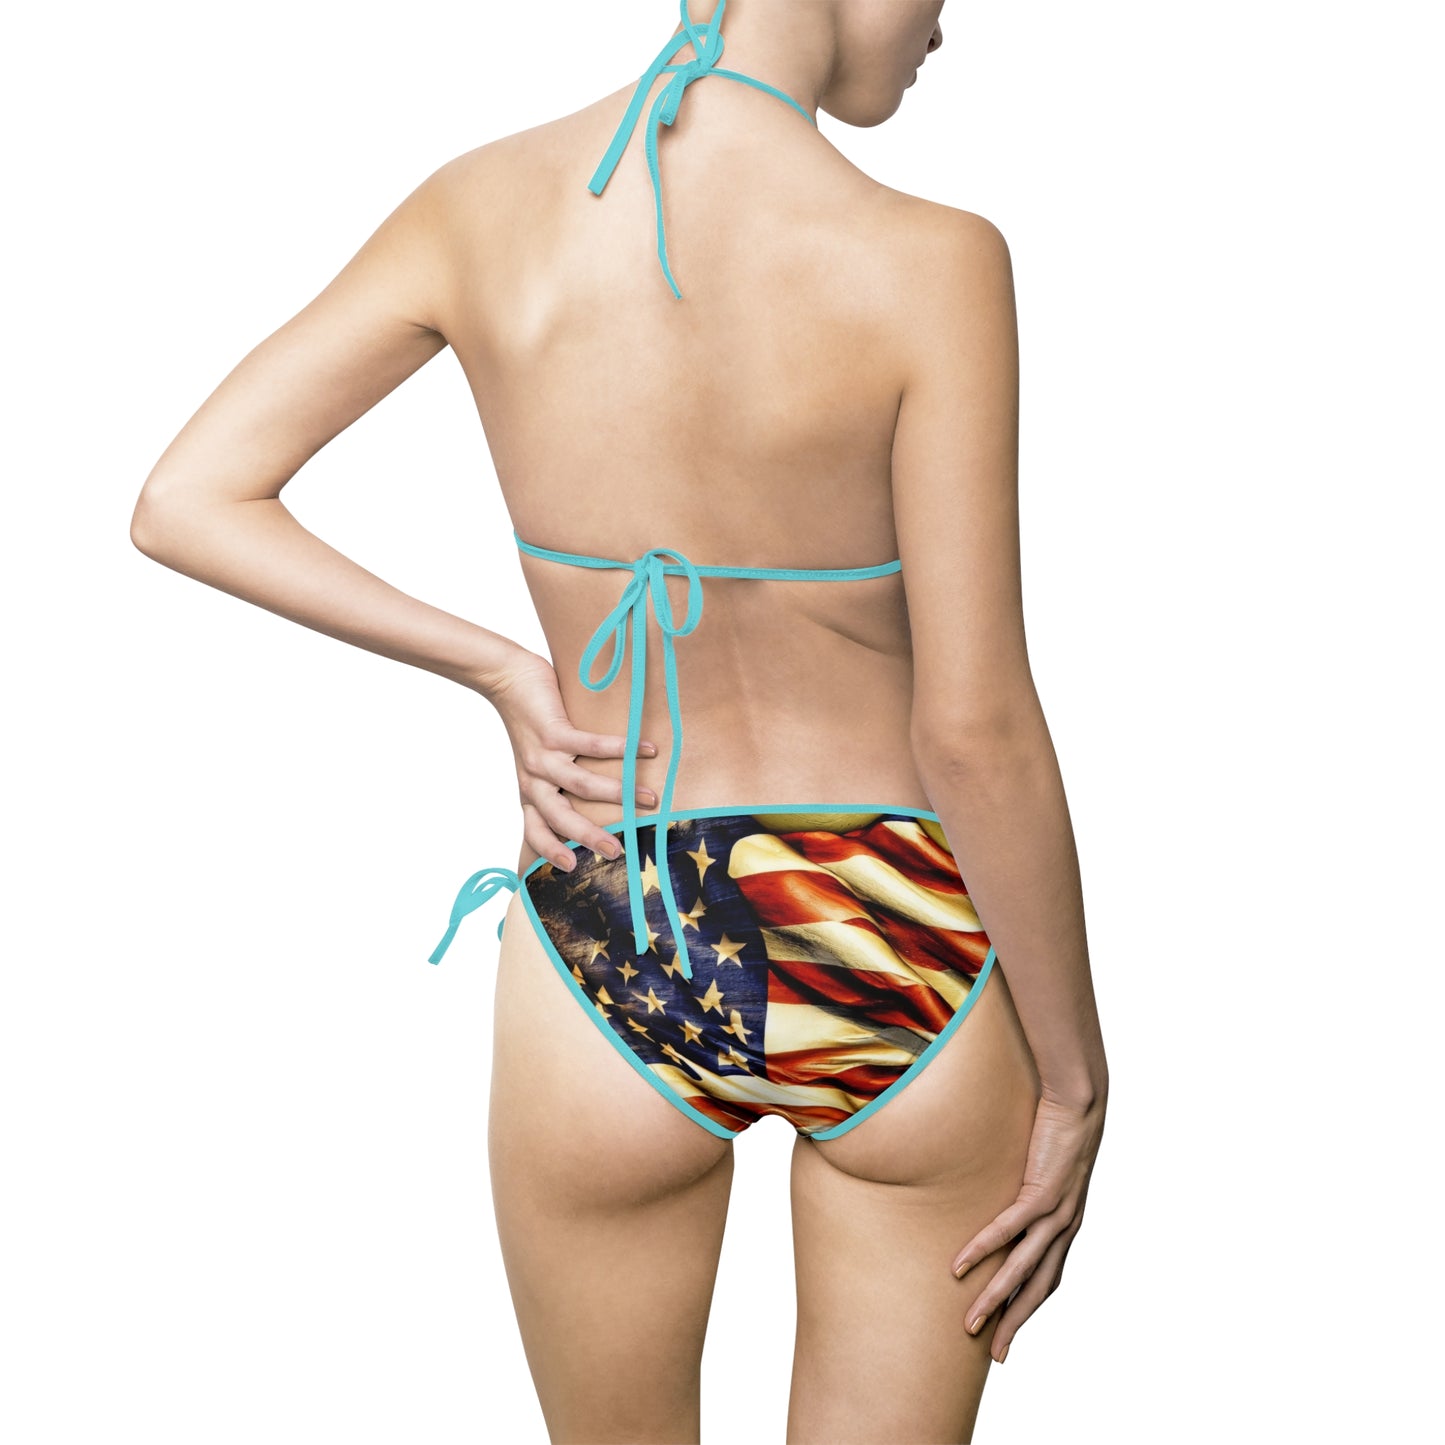 Fashion Women's Bikini Swimsuit  - American Flag Rustic Vintage Swimwear